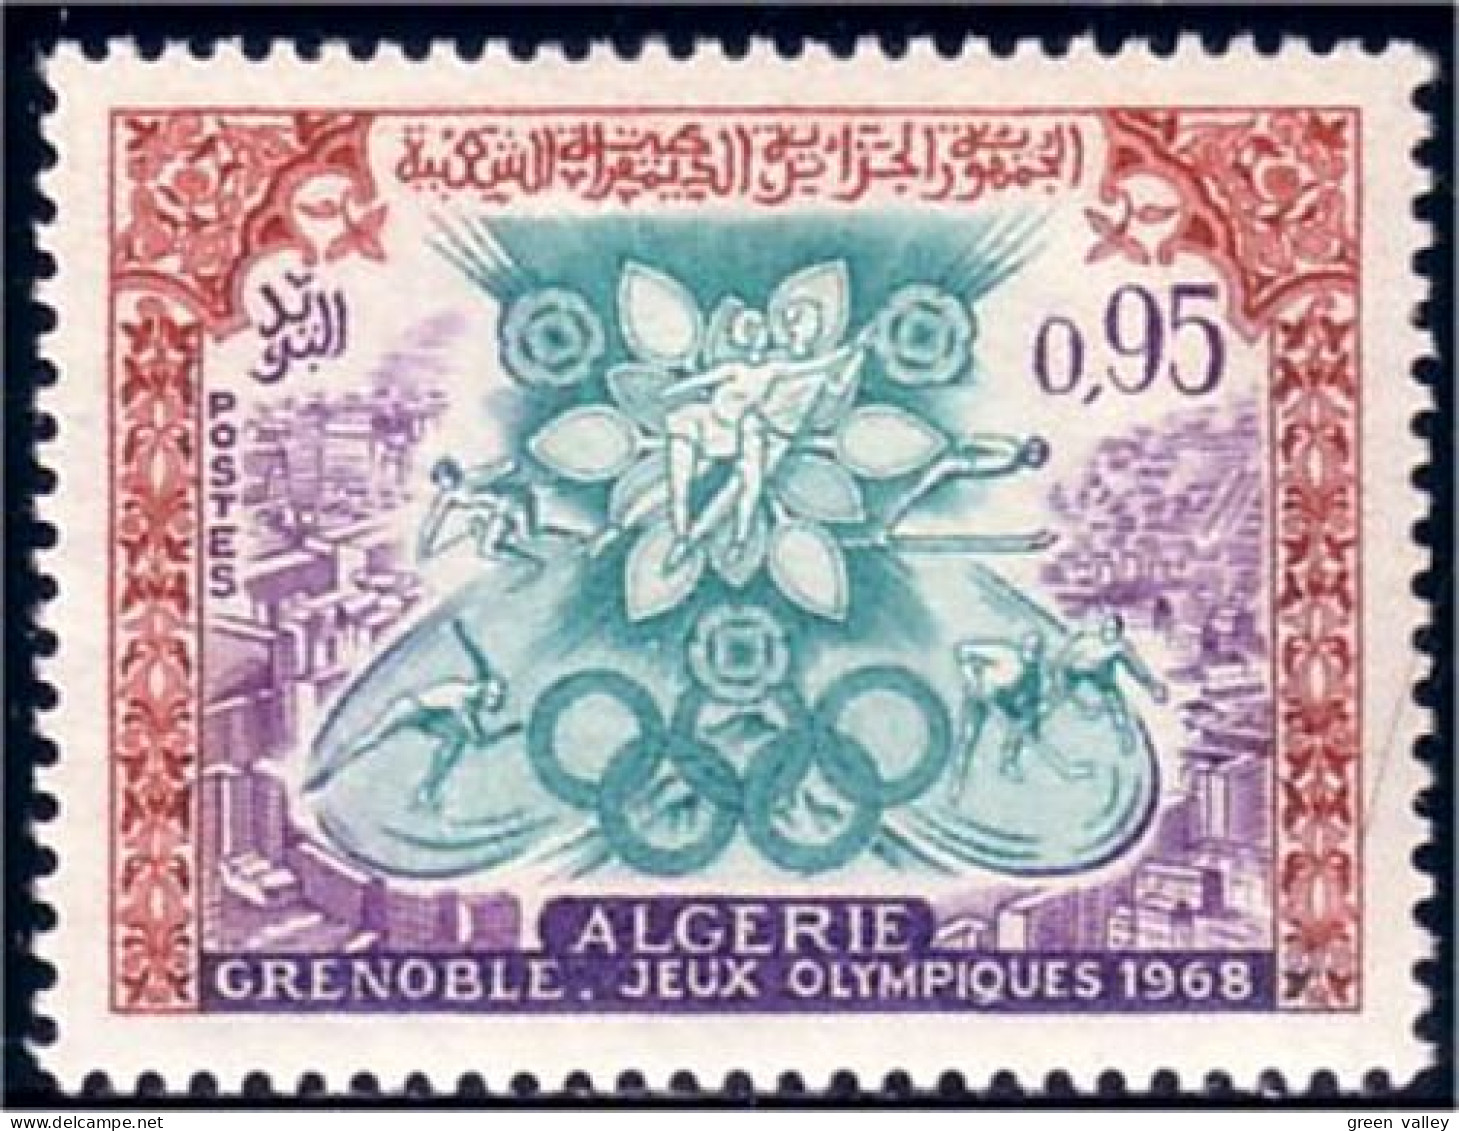 124 Algerie Patinage Grenoble 1968 Figure Skating MH * Neuf (ALG-131) - Patinage Artistique